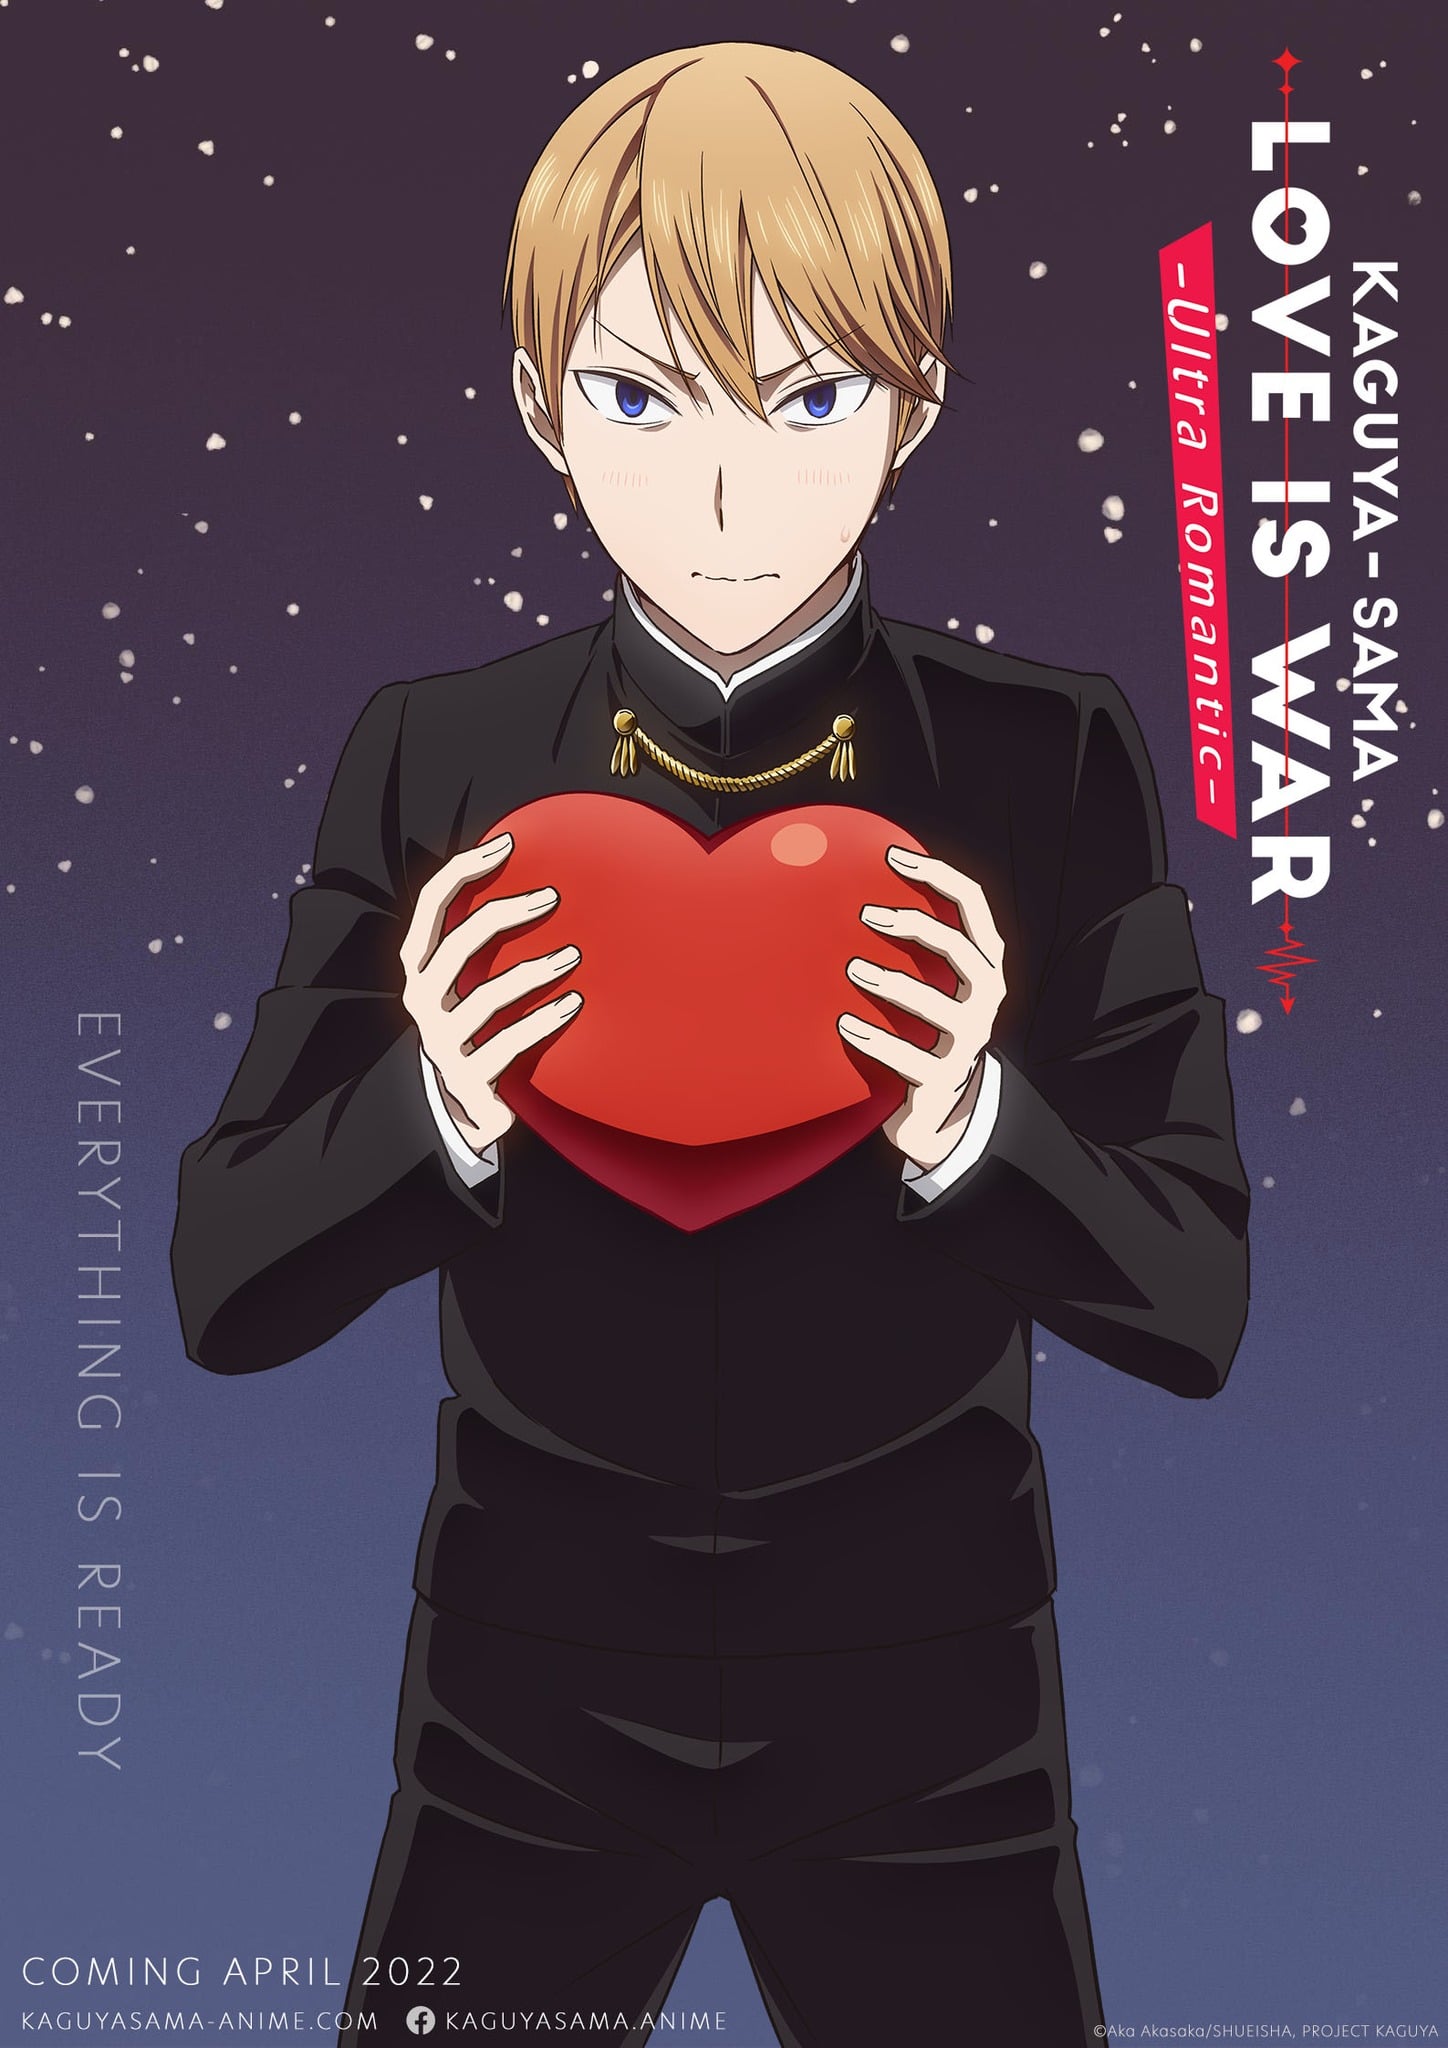 Kaguya-sama: Love Is War - Ultra Romantic- Gets New US Debut Through Aniplex of America - The Illuminerdi